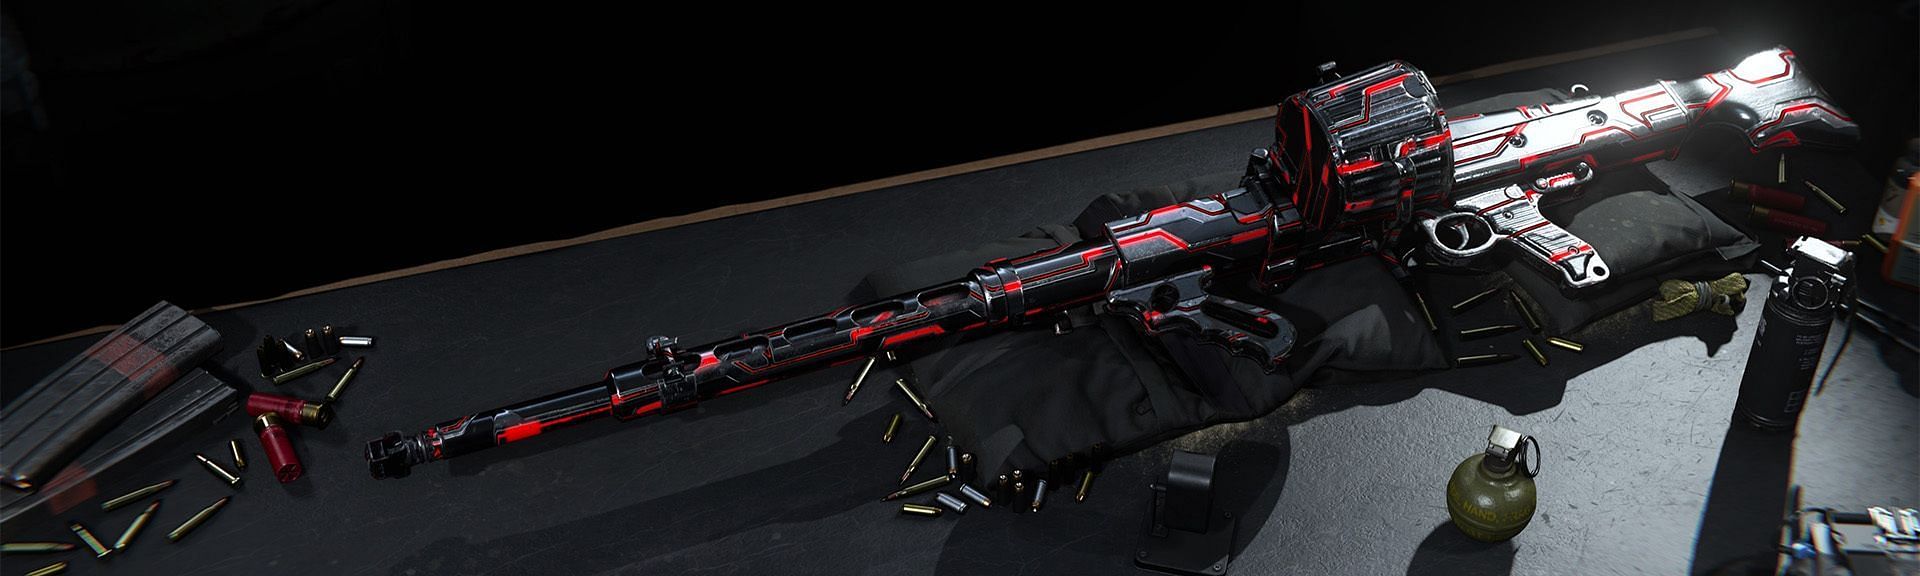 Ultra &ldquo;Skynet&rdquo; Vanguard Weapon Camo (image via Activision)